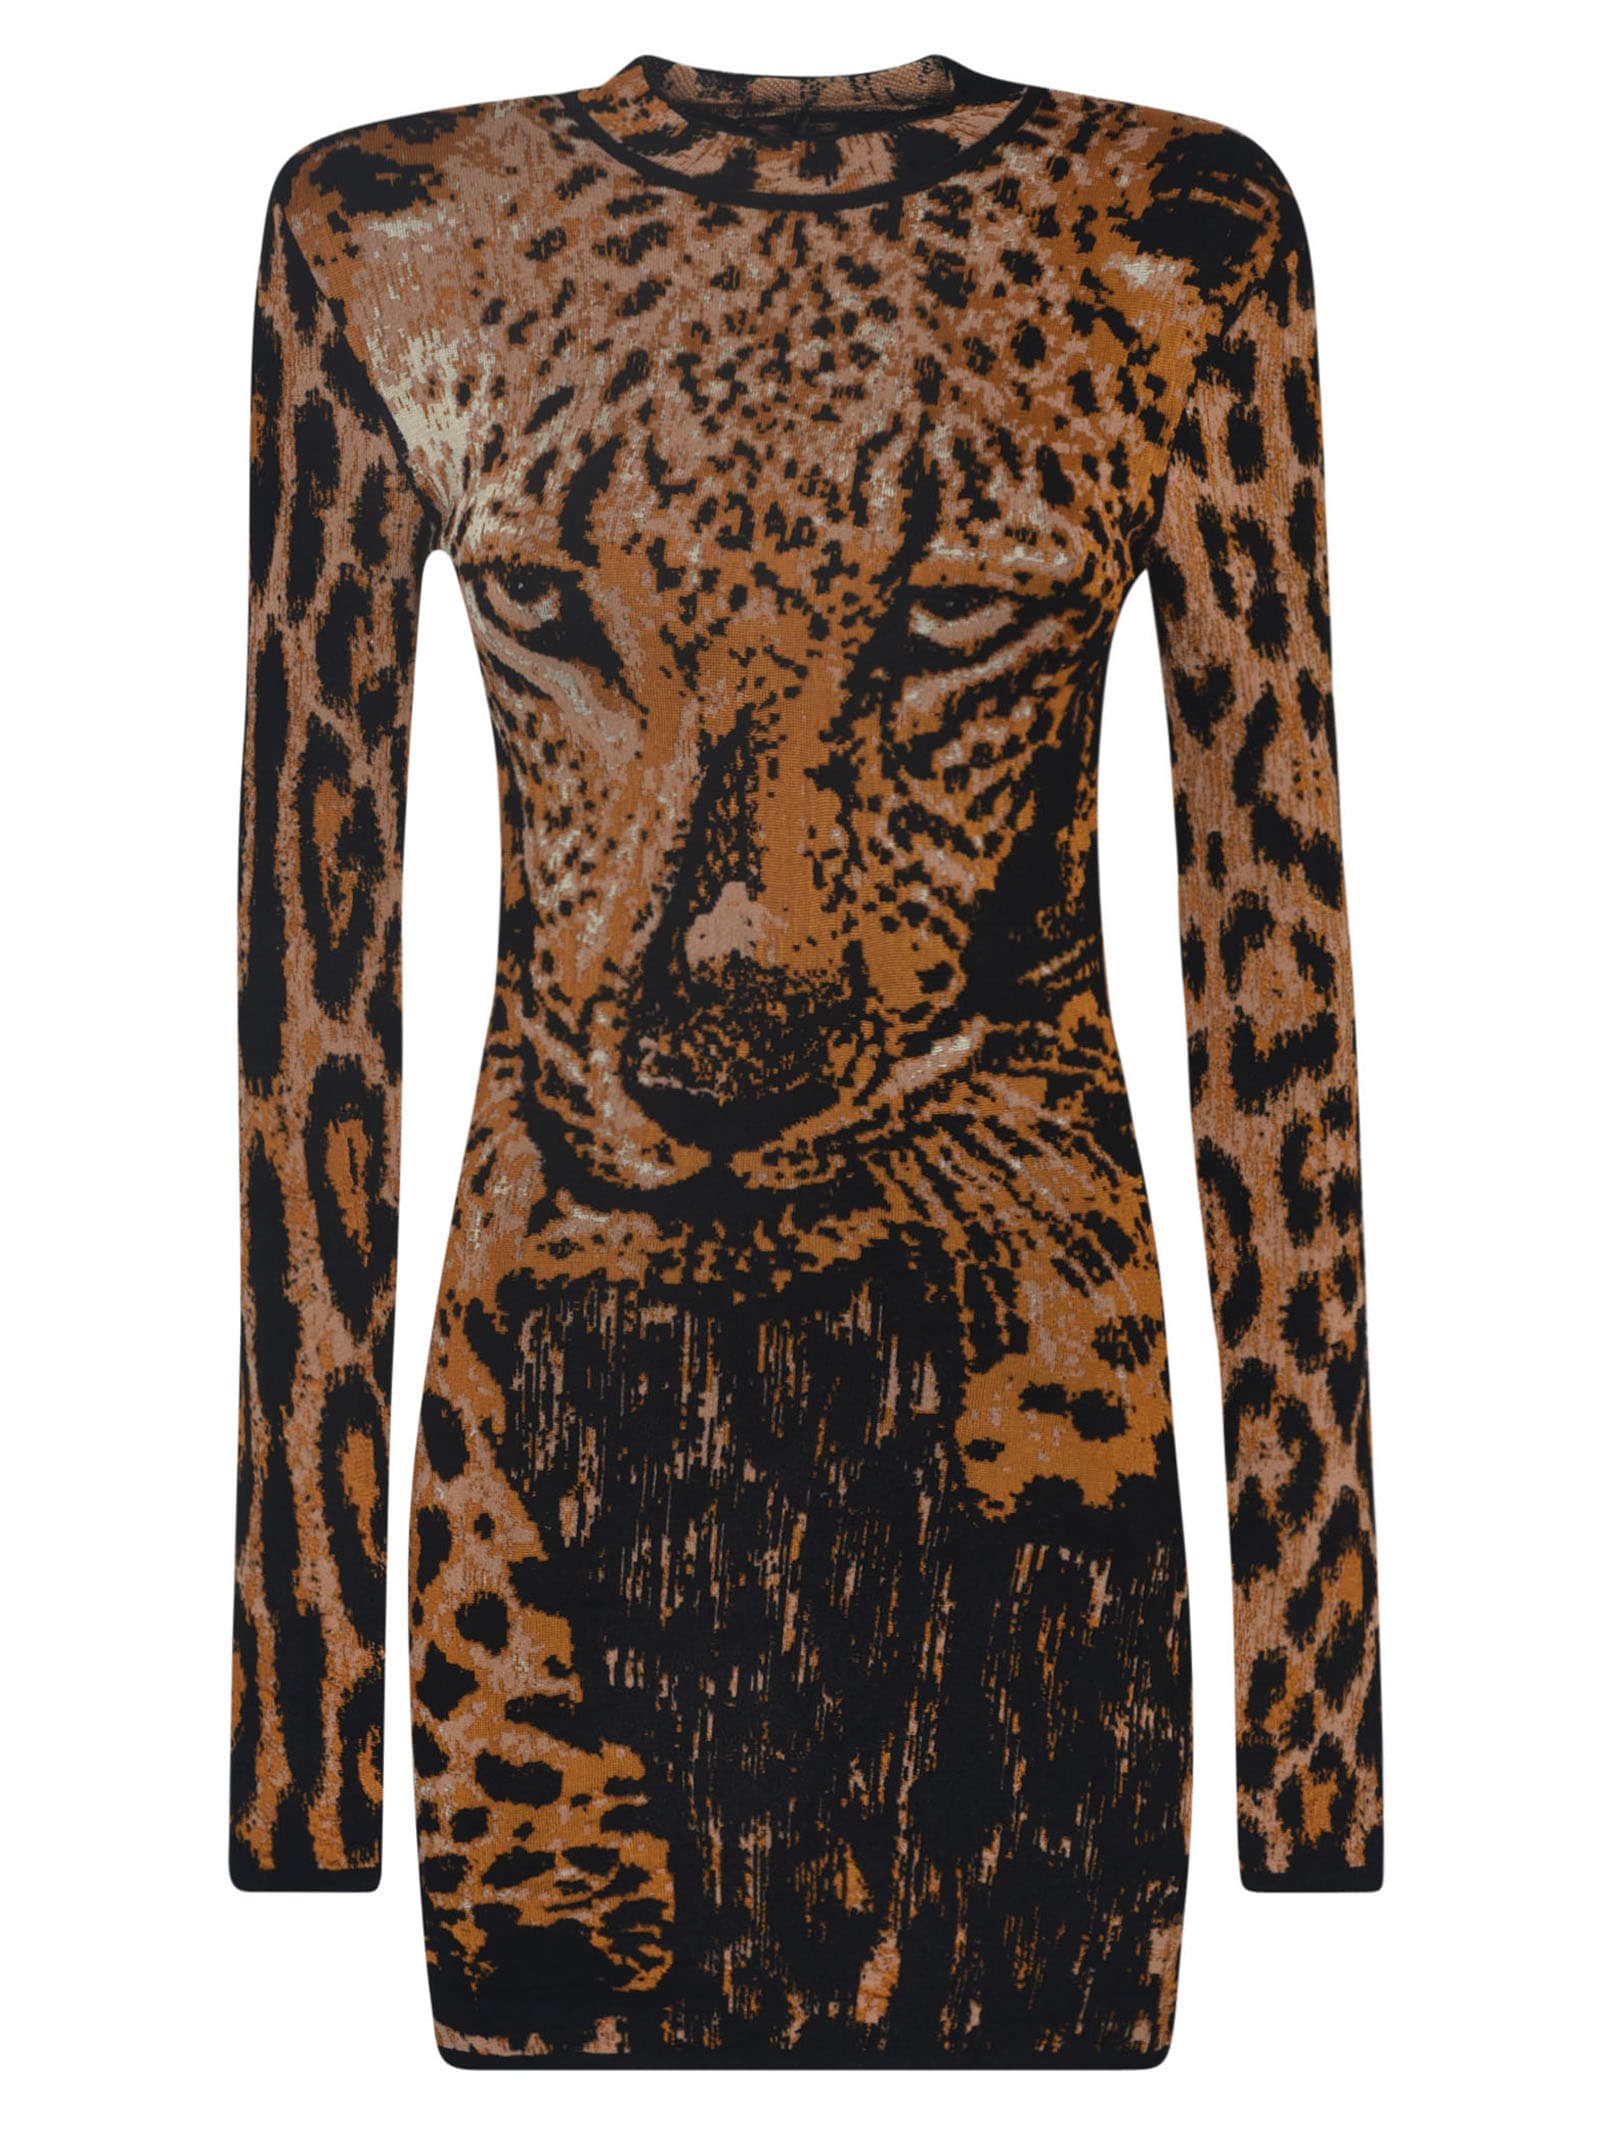 Roberto Cavalli Tiger Cropped Dress